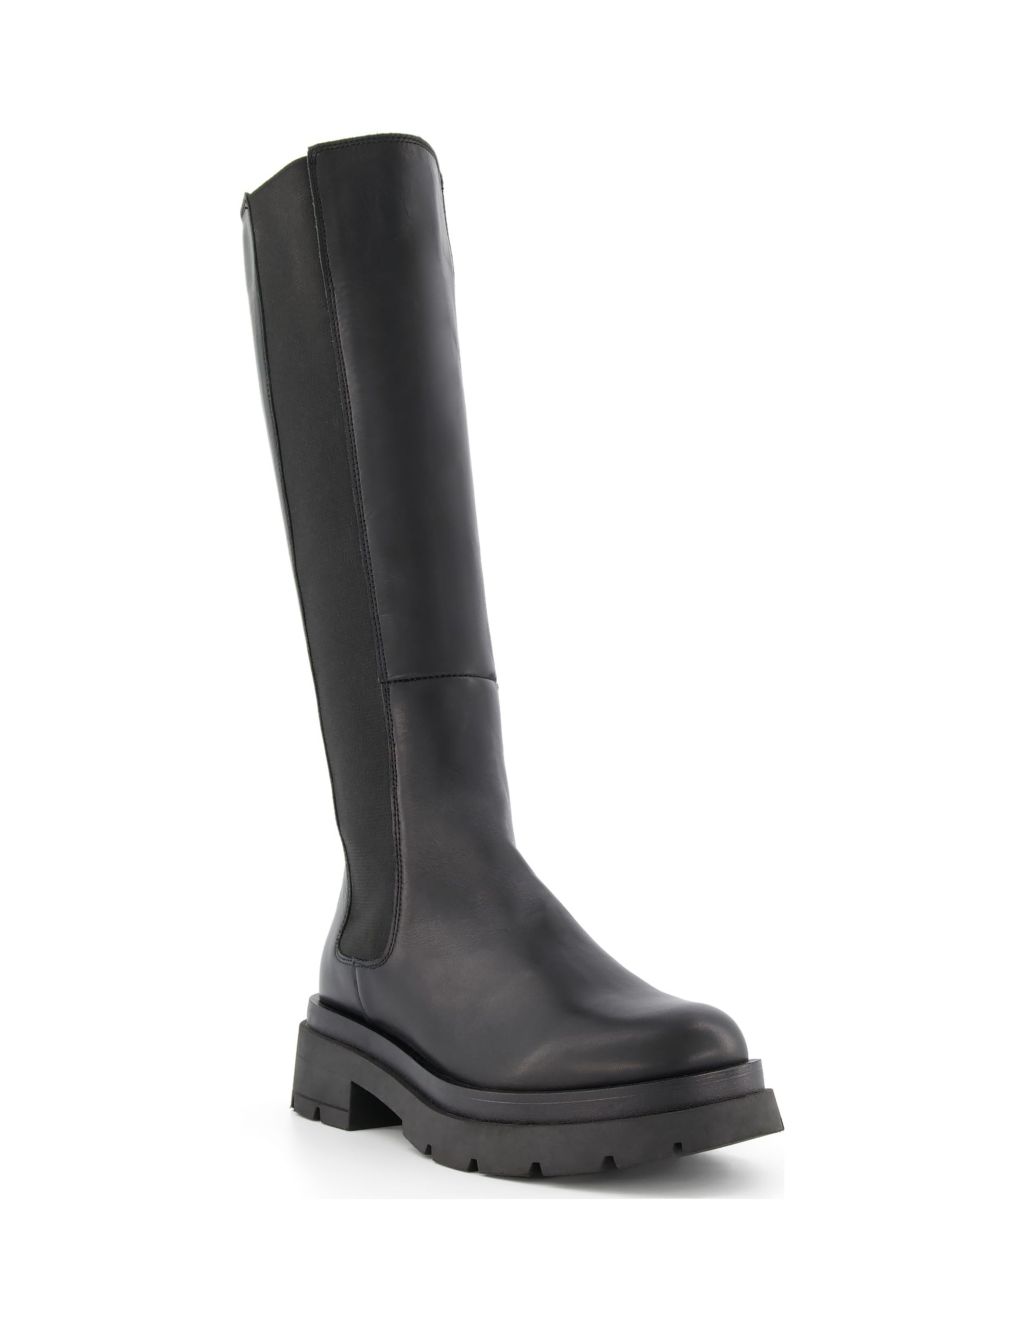 Leather Chunky Flatform Knee High Boots | Dune London | M&S